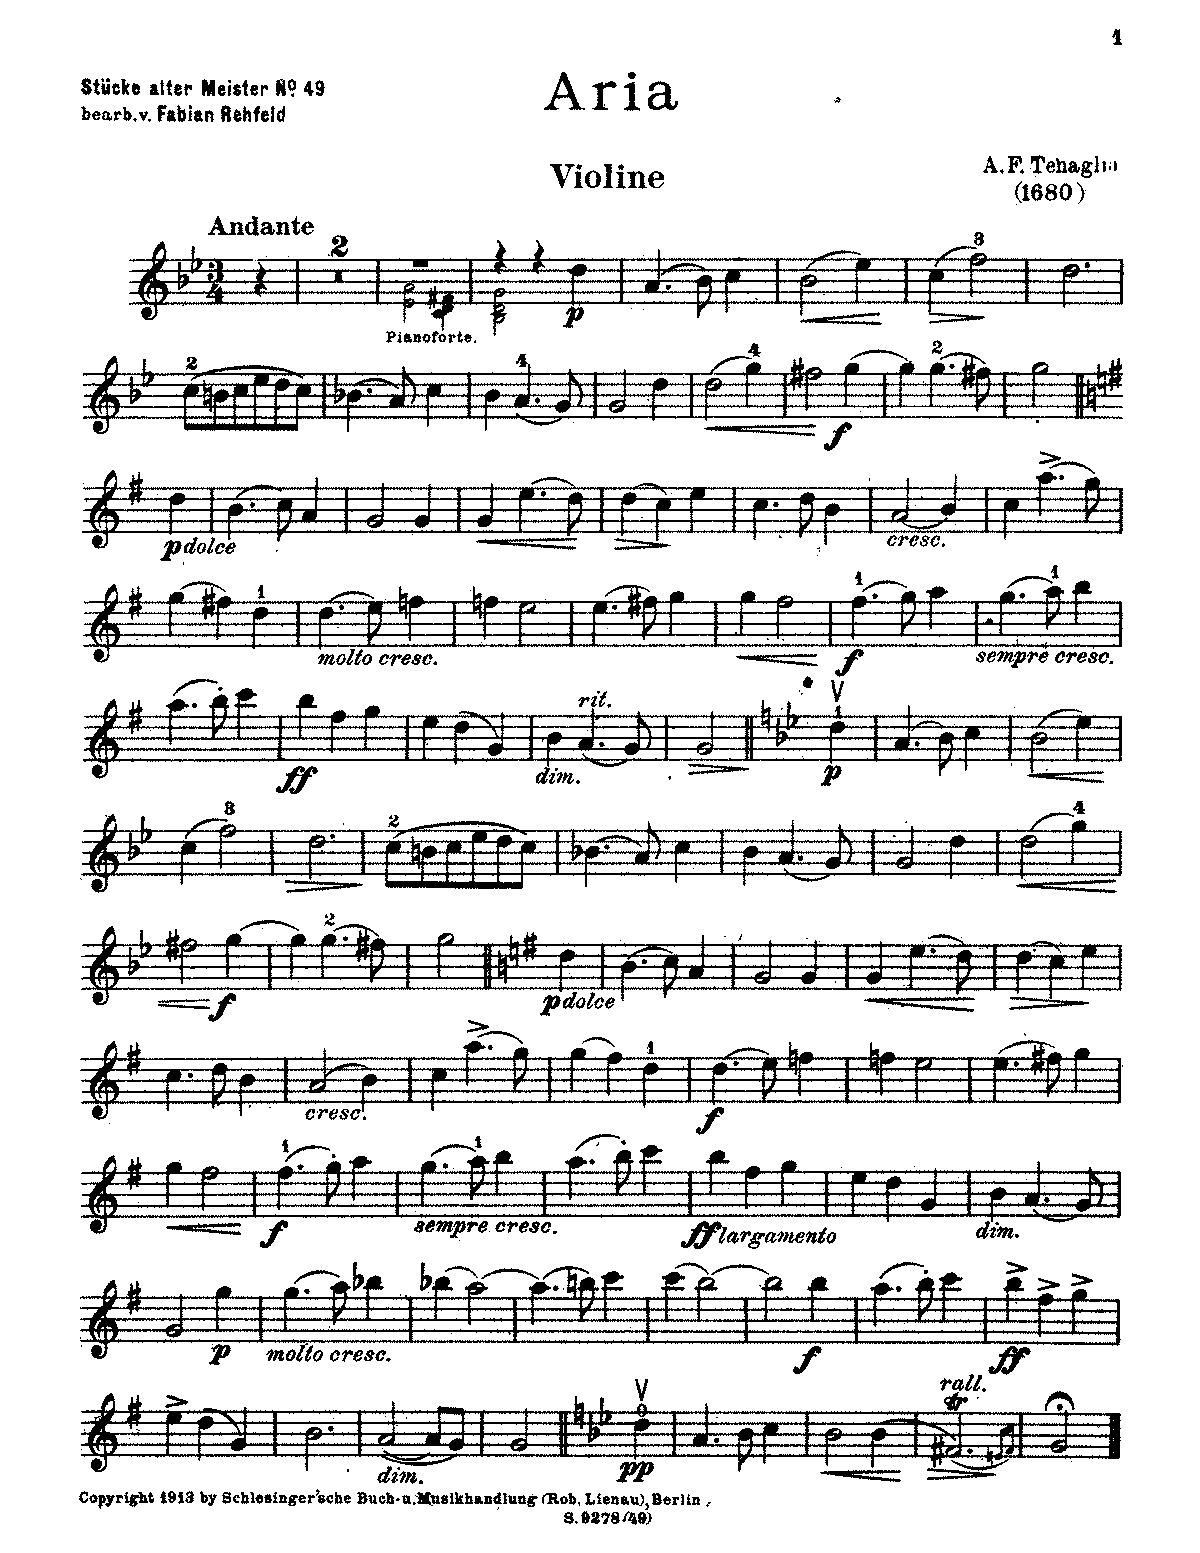 Stücke alter Meister (Rehfeld, Fabian) - IMSLP: Free Sheet Music PDF